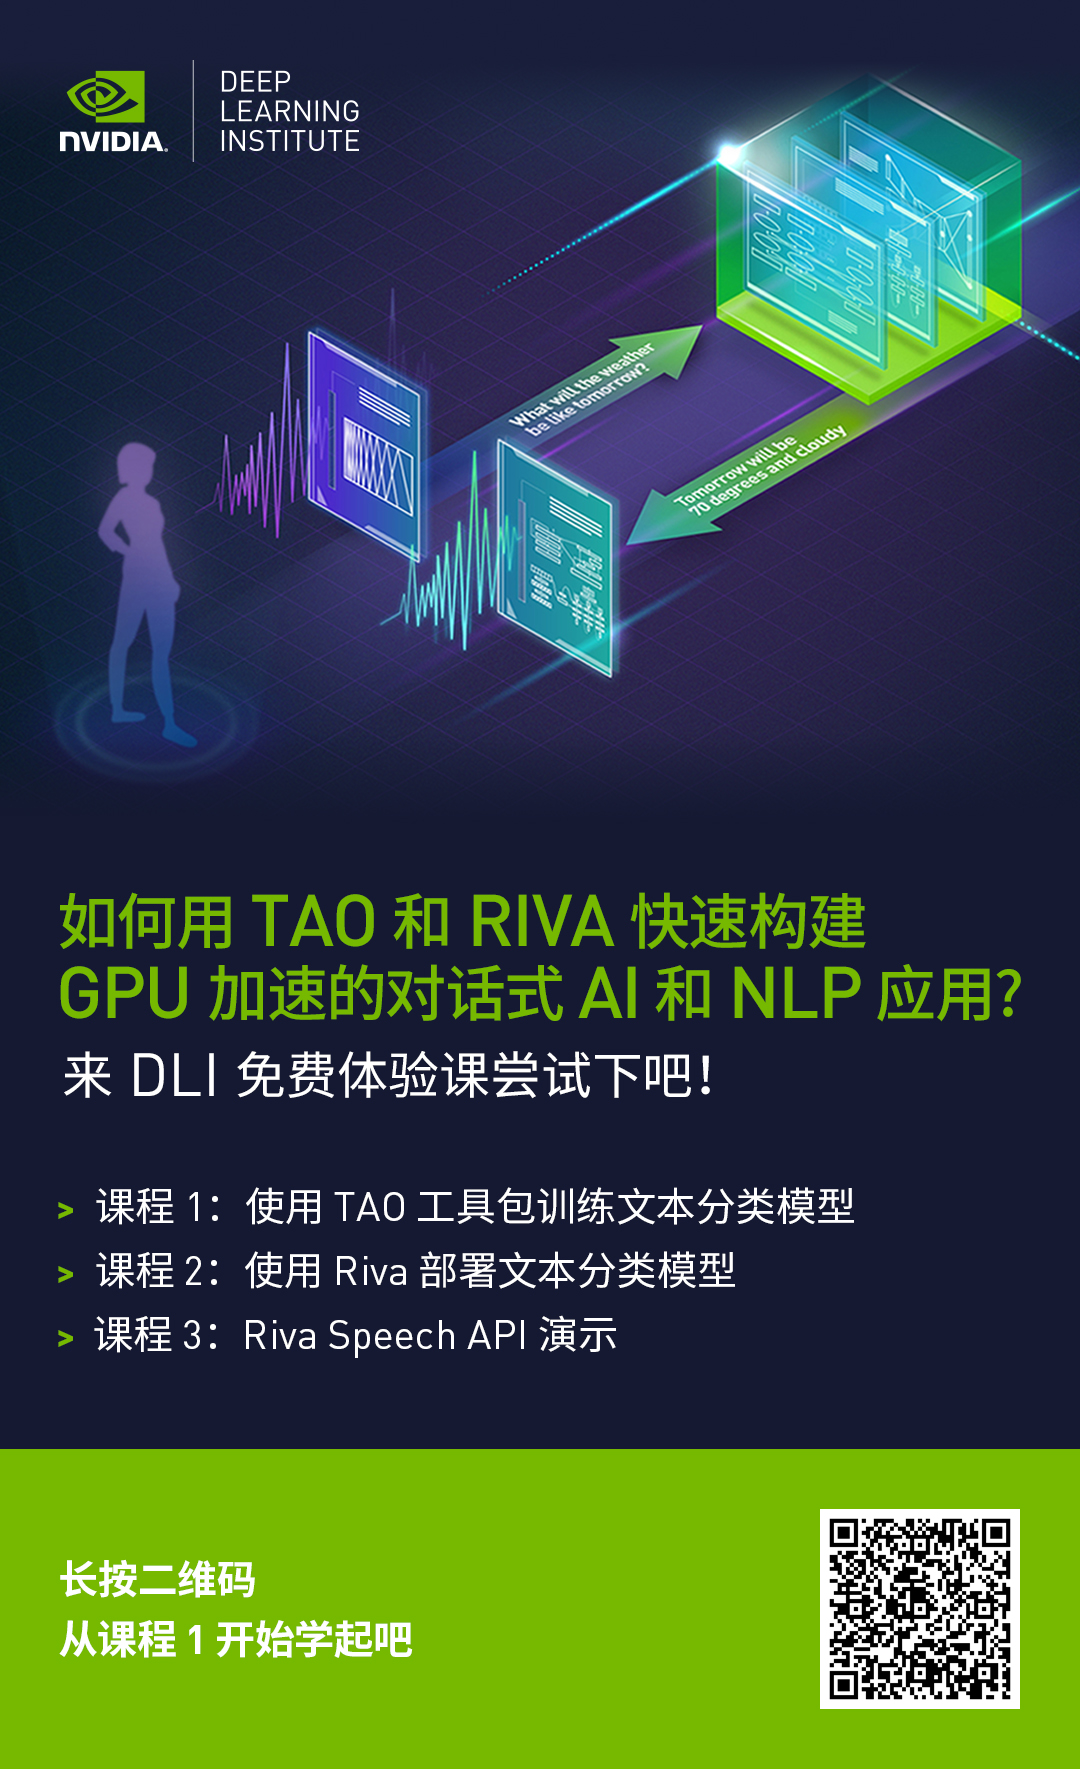 nvidia-dli-course-riva-wechat-poster-1080-zhCN-2251054.jpg